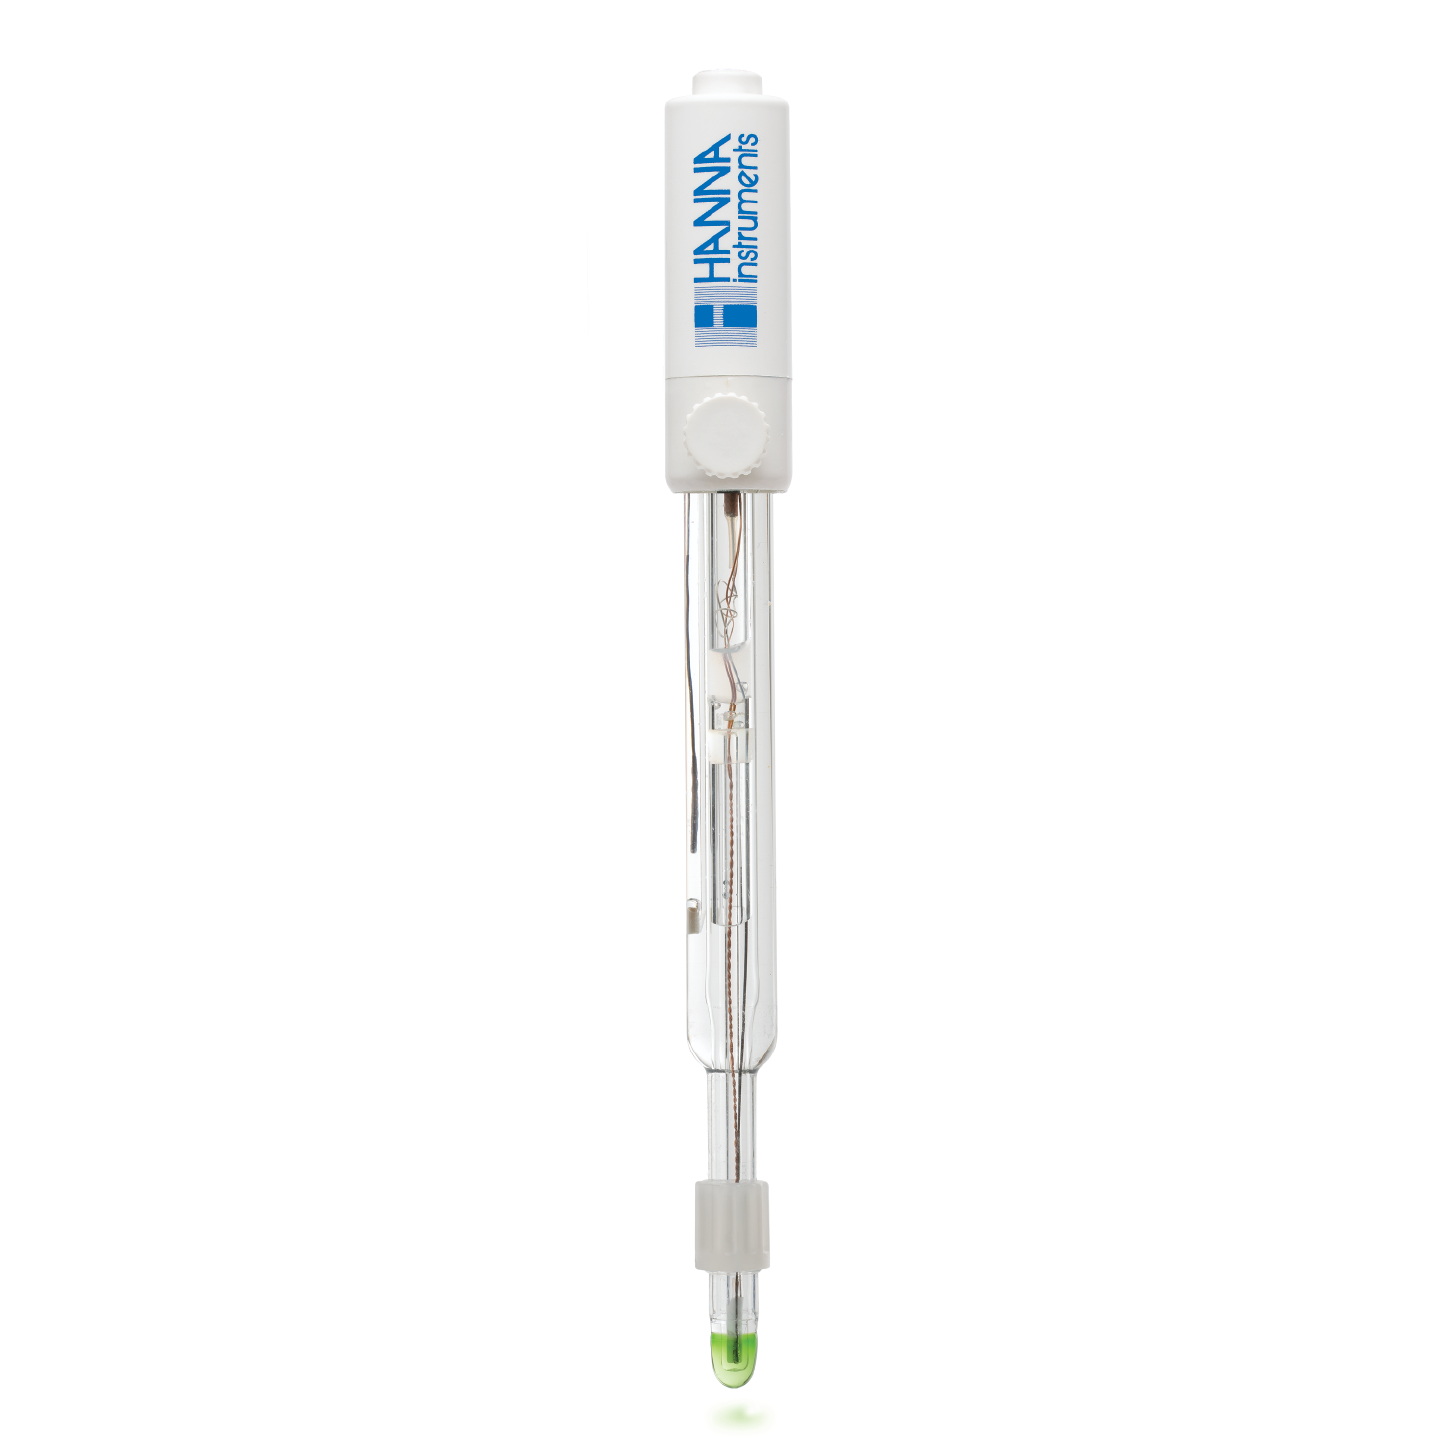 [:lt]FC10483 - pH elektrodas su užsikimšimo prevencijos sistema (CPS™) ir greita DIN jungtimi[:en]FC10483 - pH Electrode with Clogging Prevention System (CPS™) and Quick DIN Connector[:]